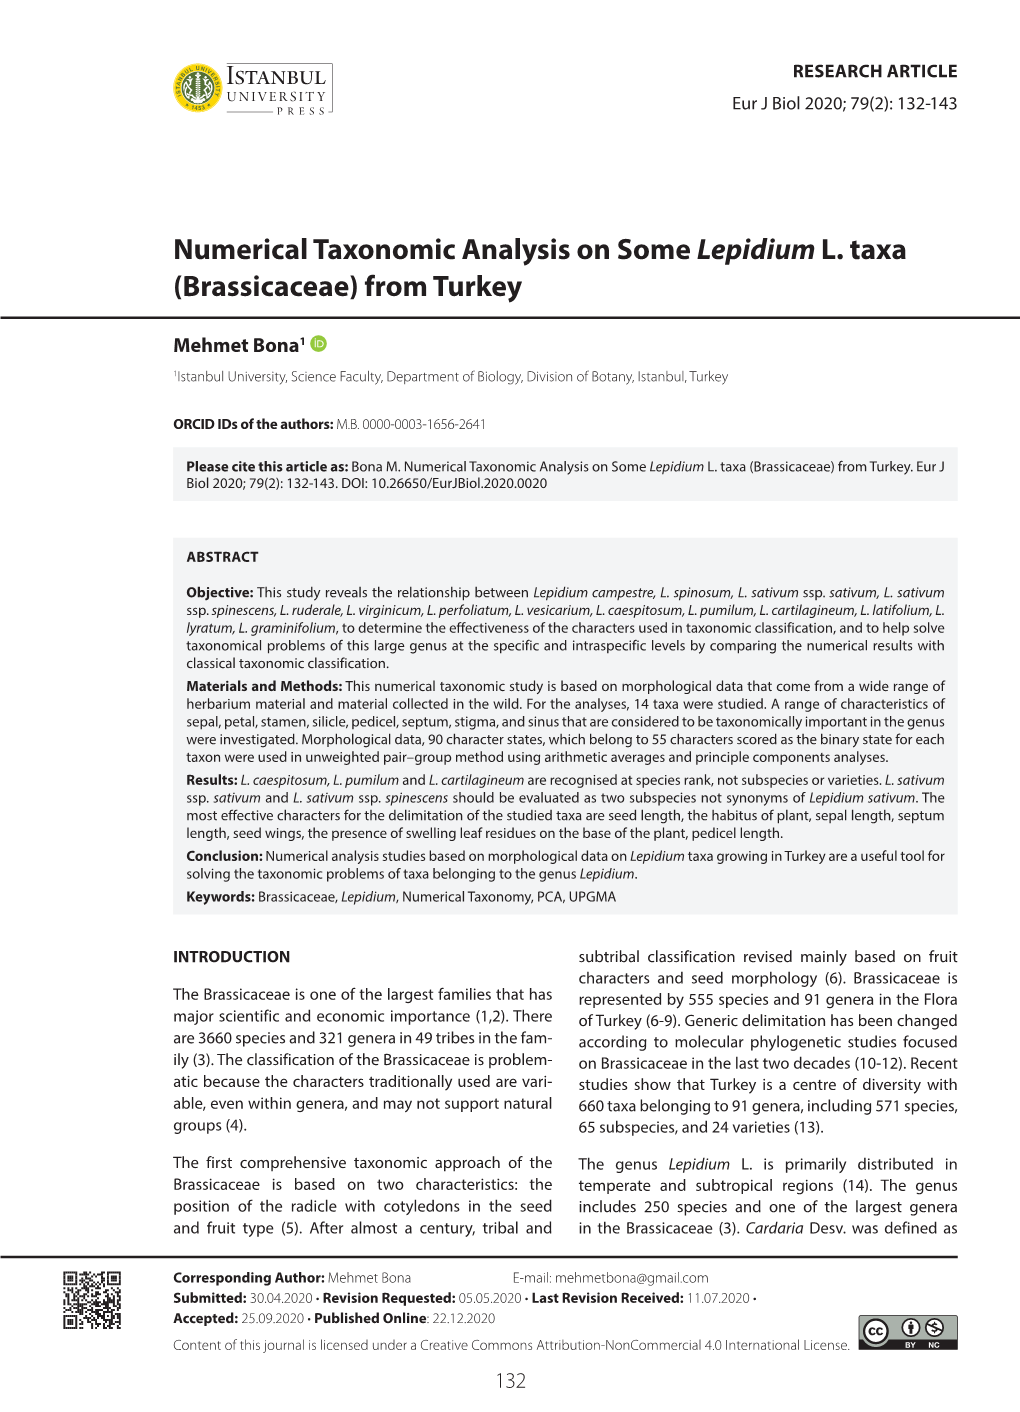 Numerical Taxonomic Analysis on Some Lepidium L. Taxa (Brassicaceae) from Turkey